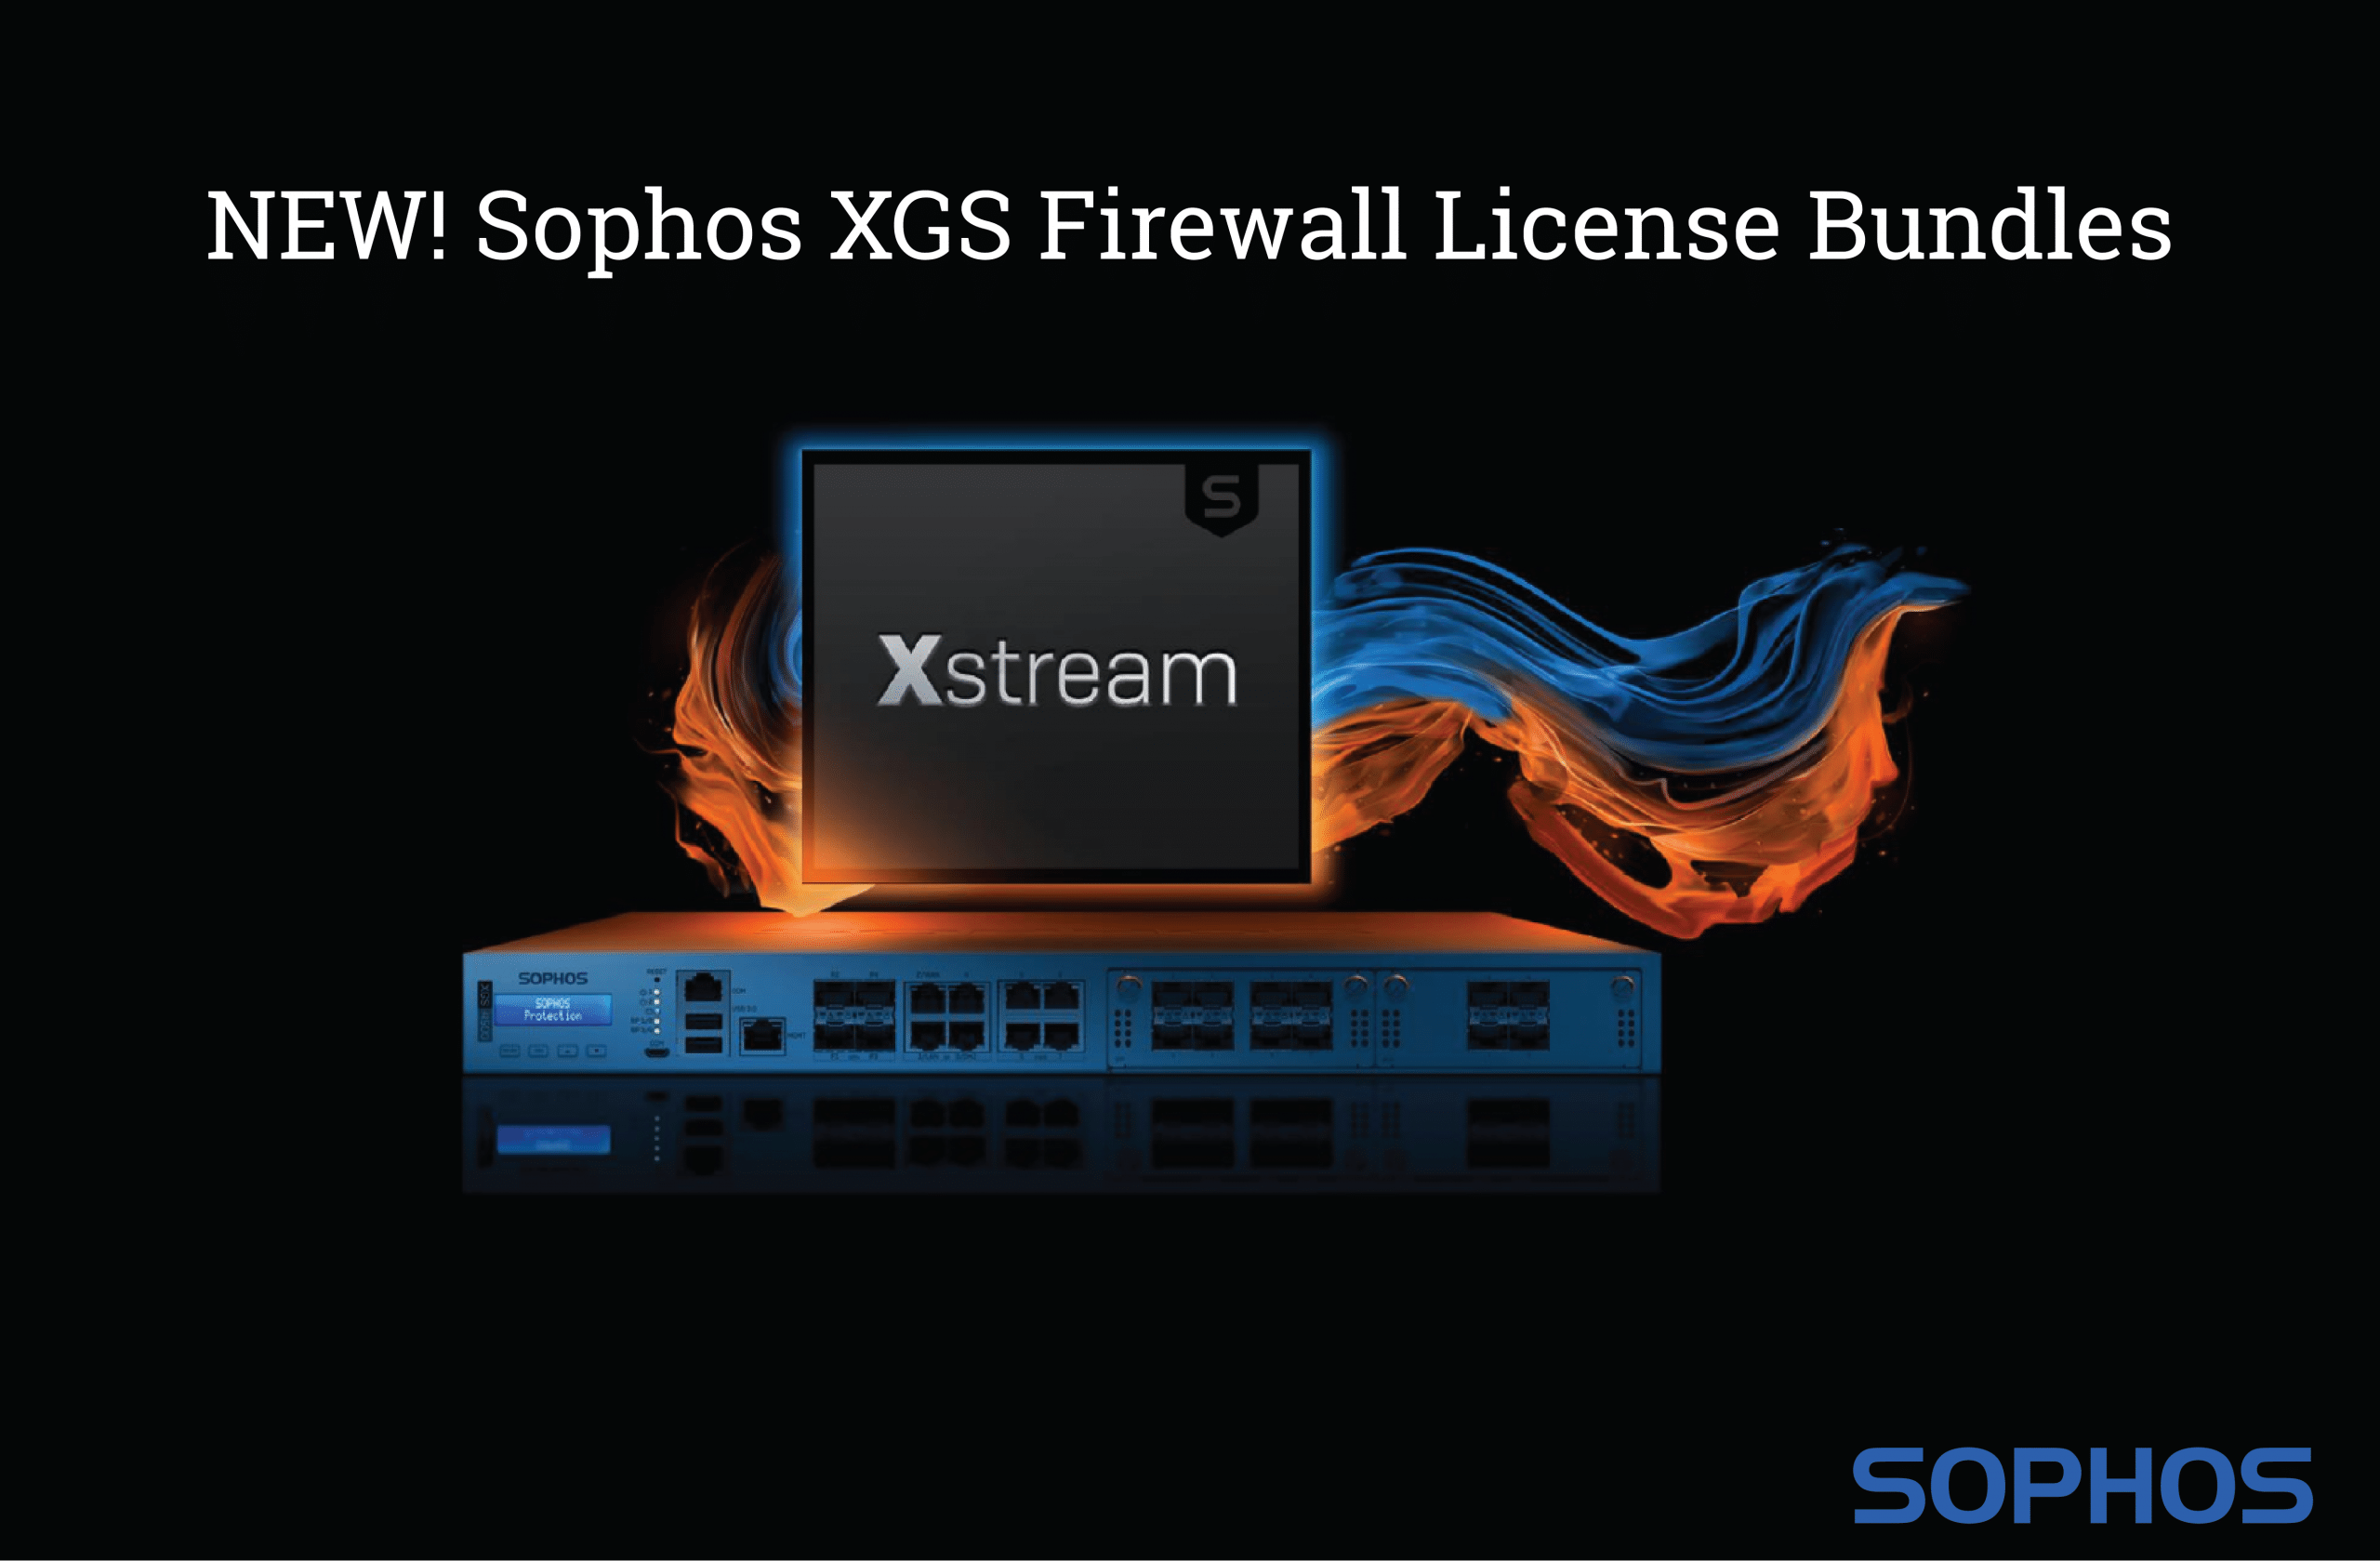 Sophos XGS Firewall License Bundles